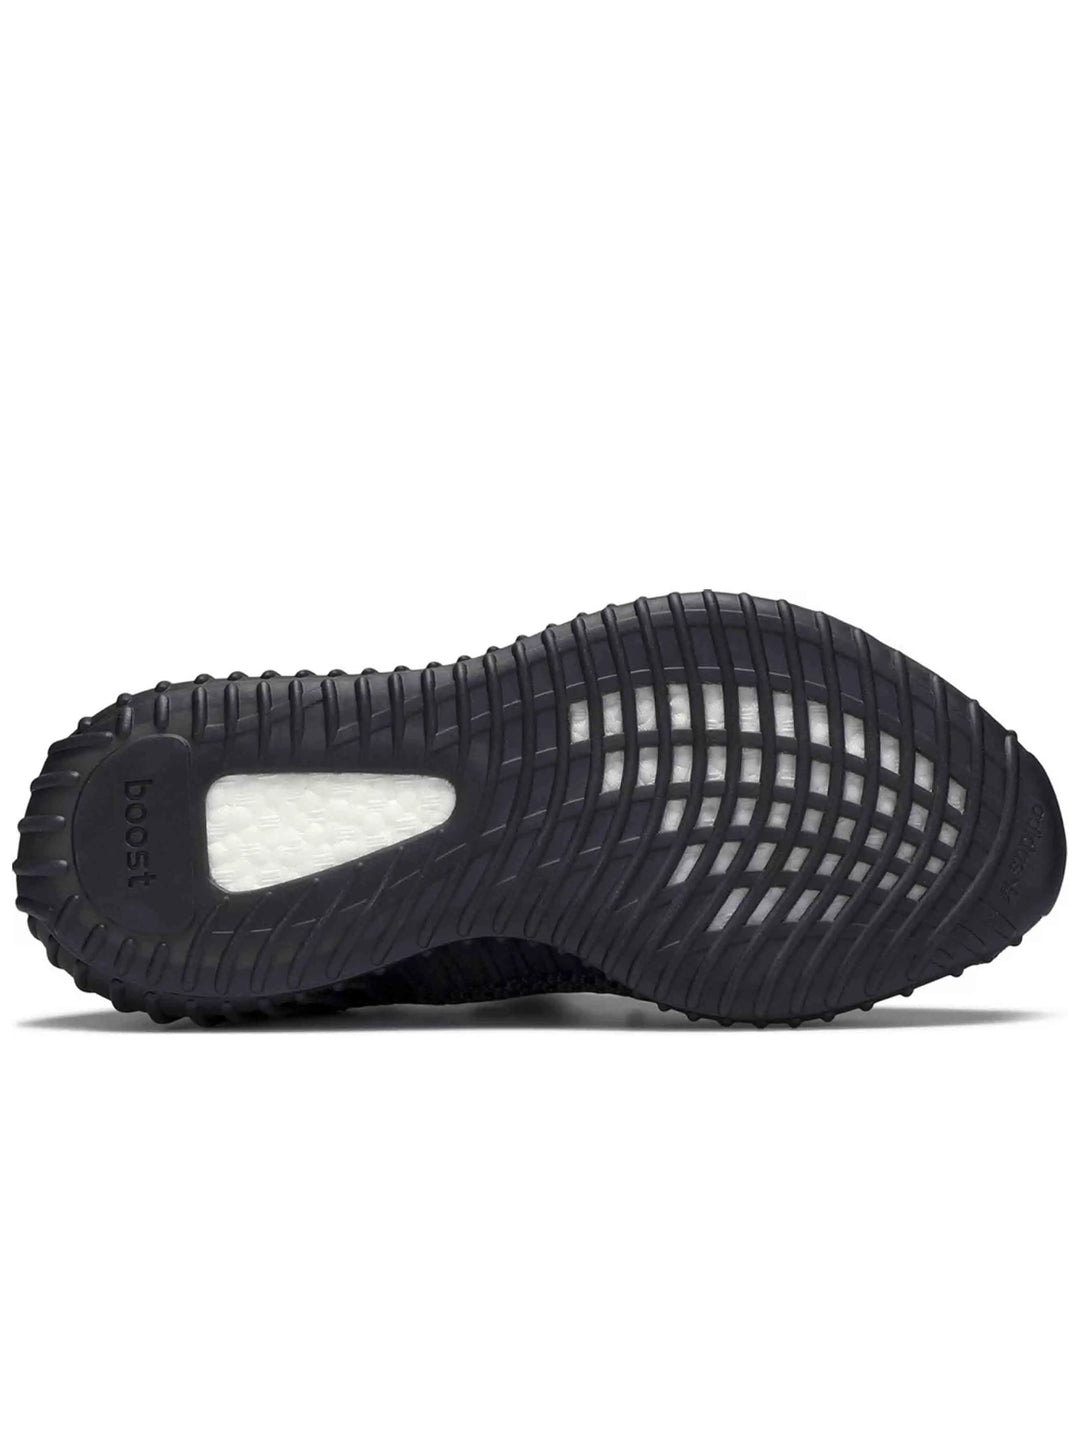 adidas Yeezy Boost 350 V2 Black (Non-Reflective) Prior